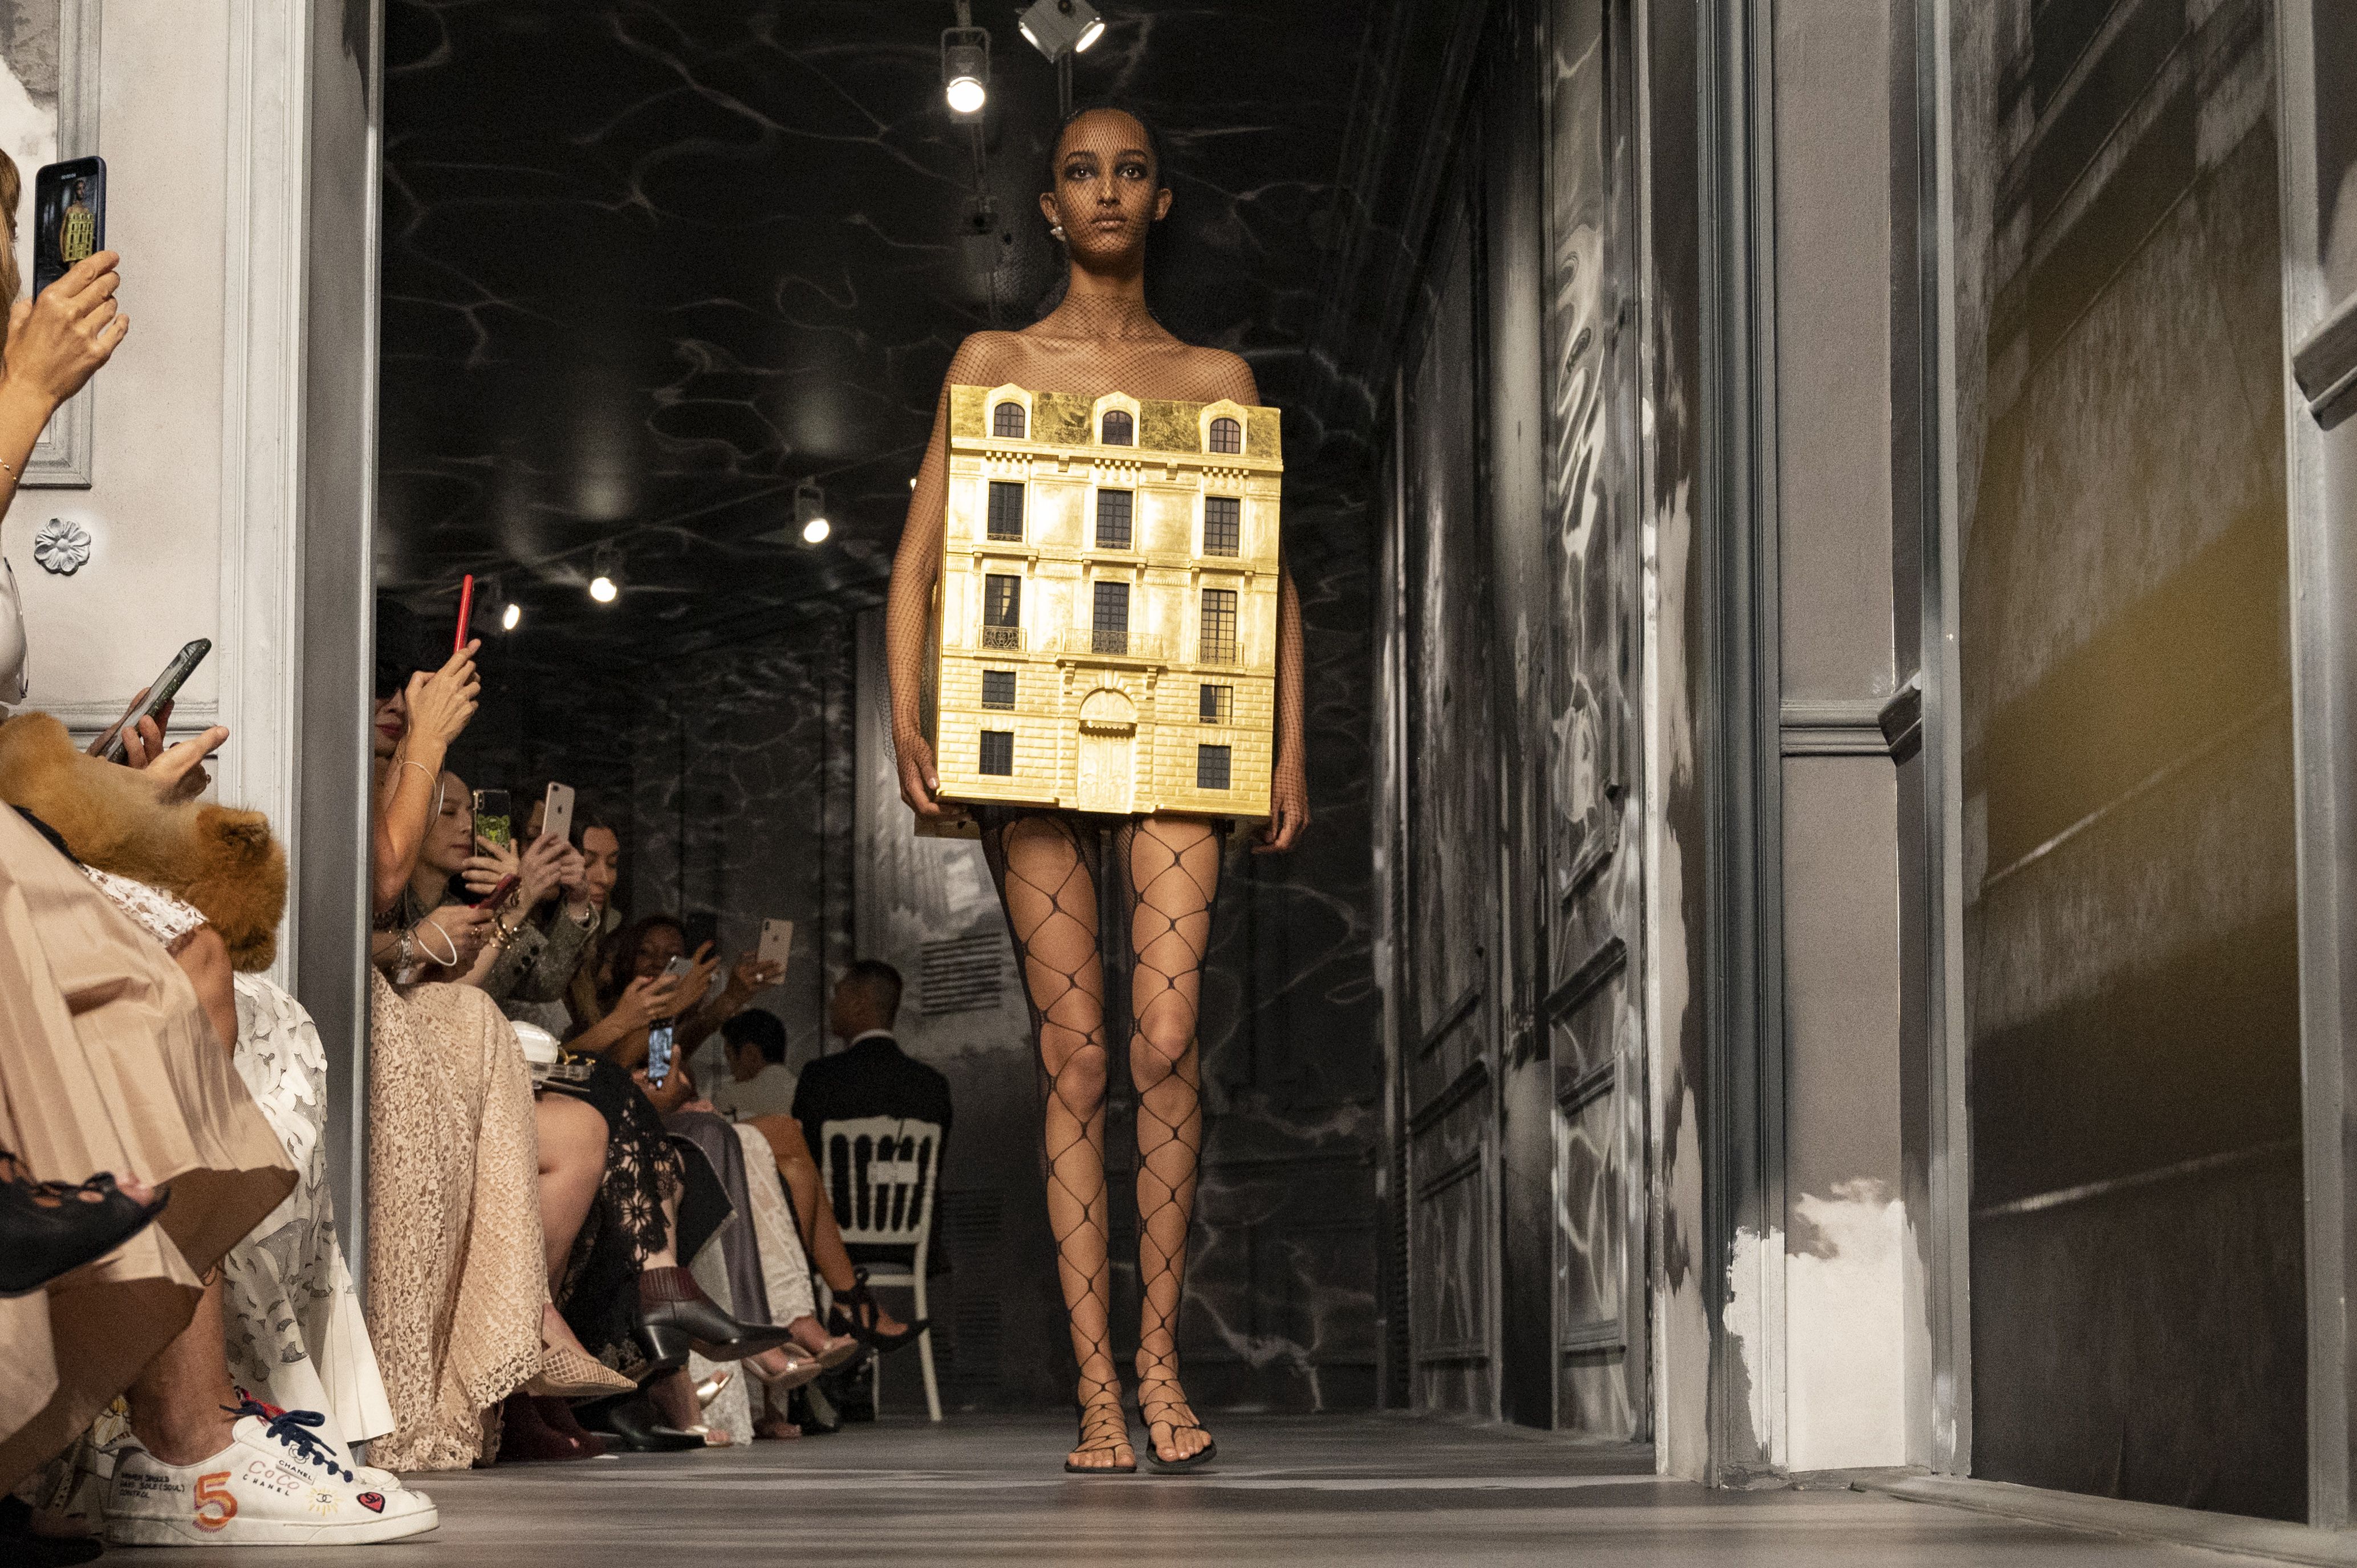 Fendi in Rome: Beyond High Fashion - Romeing